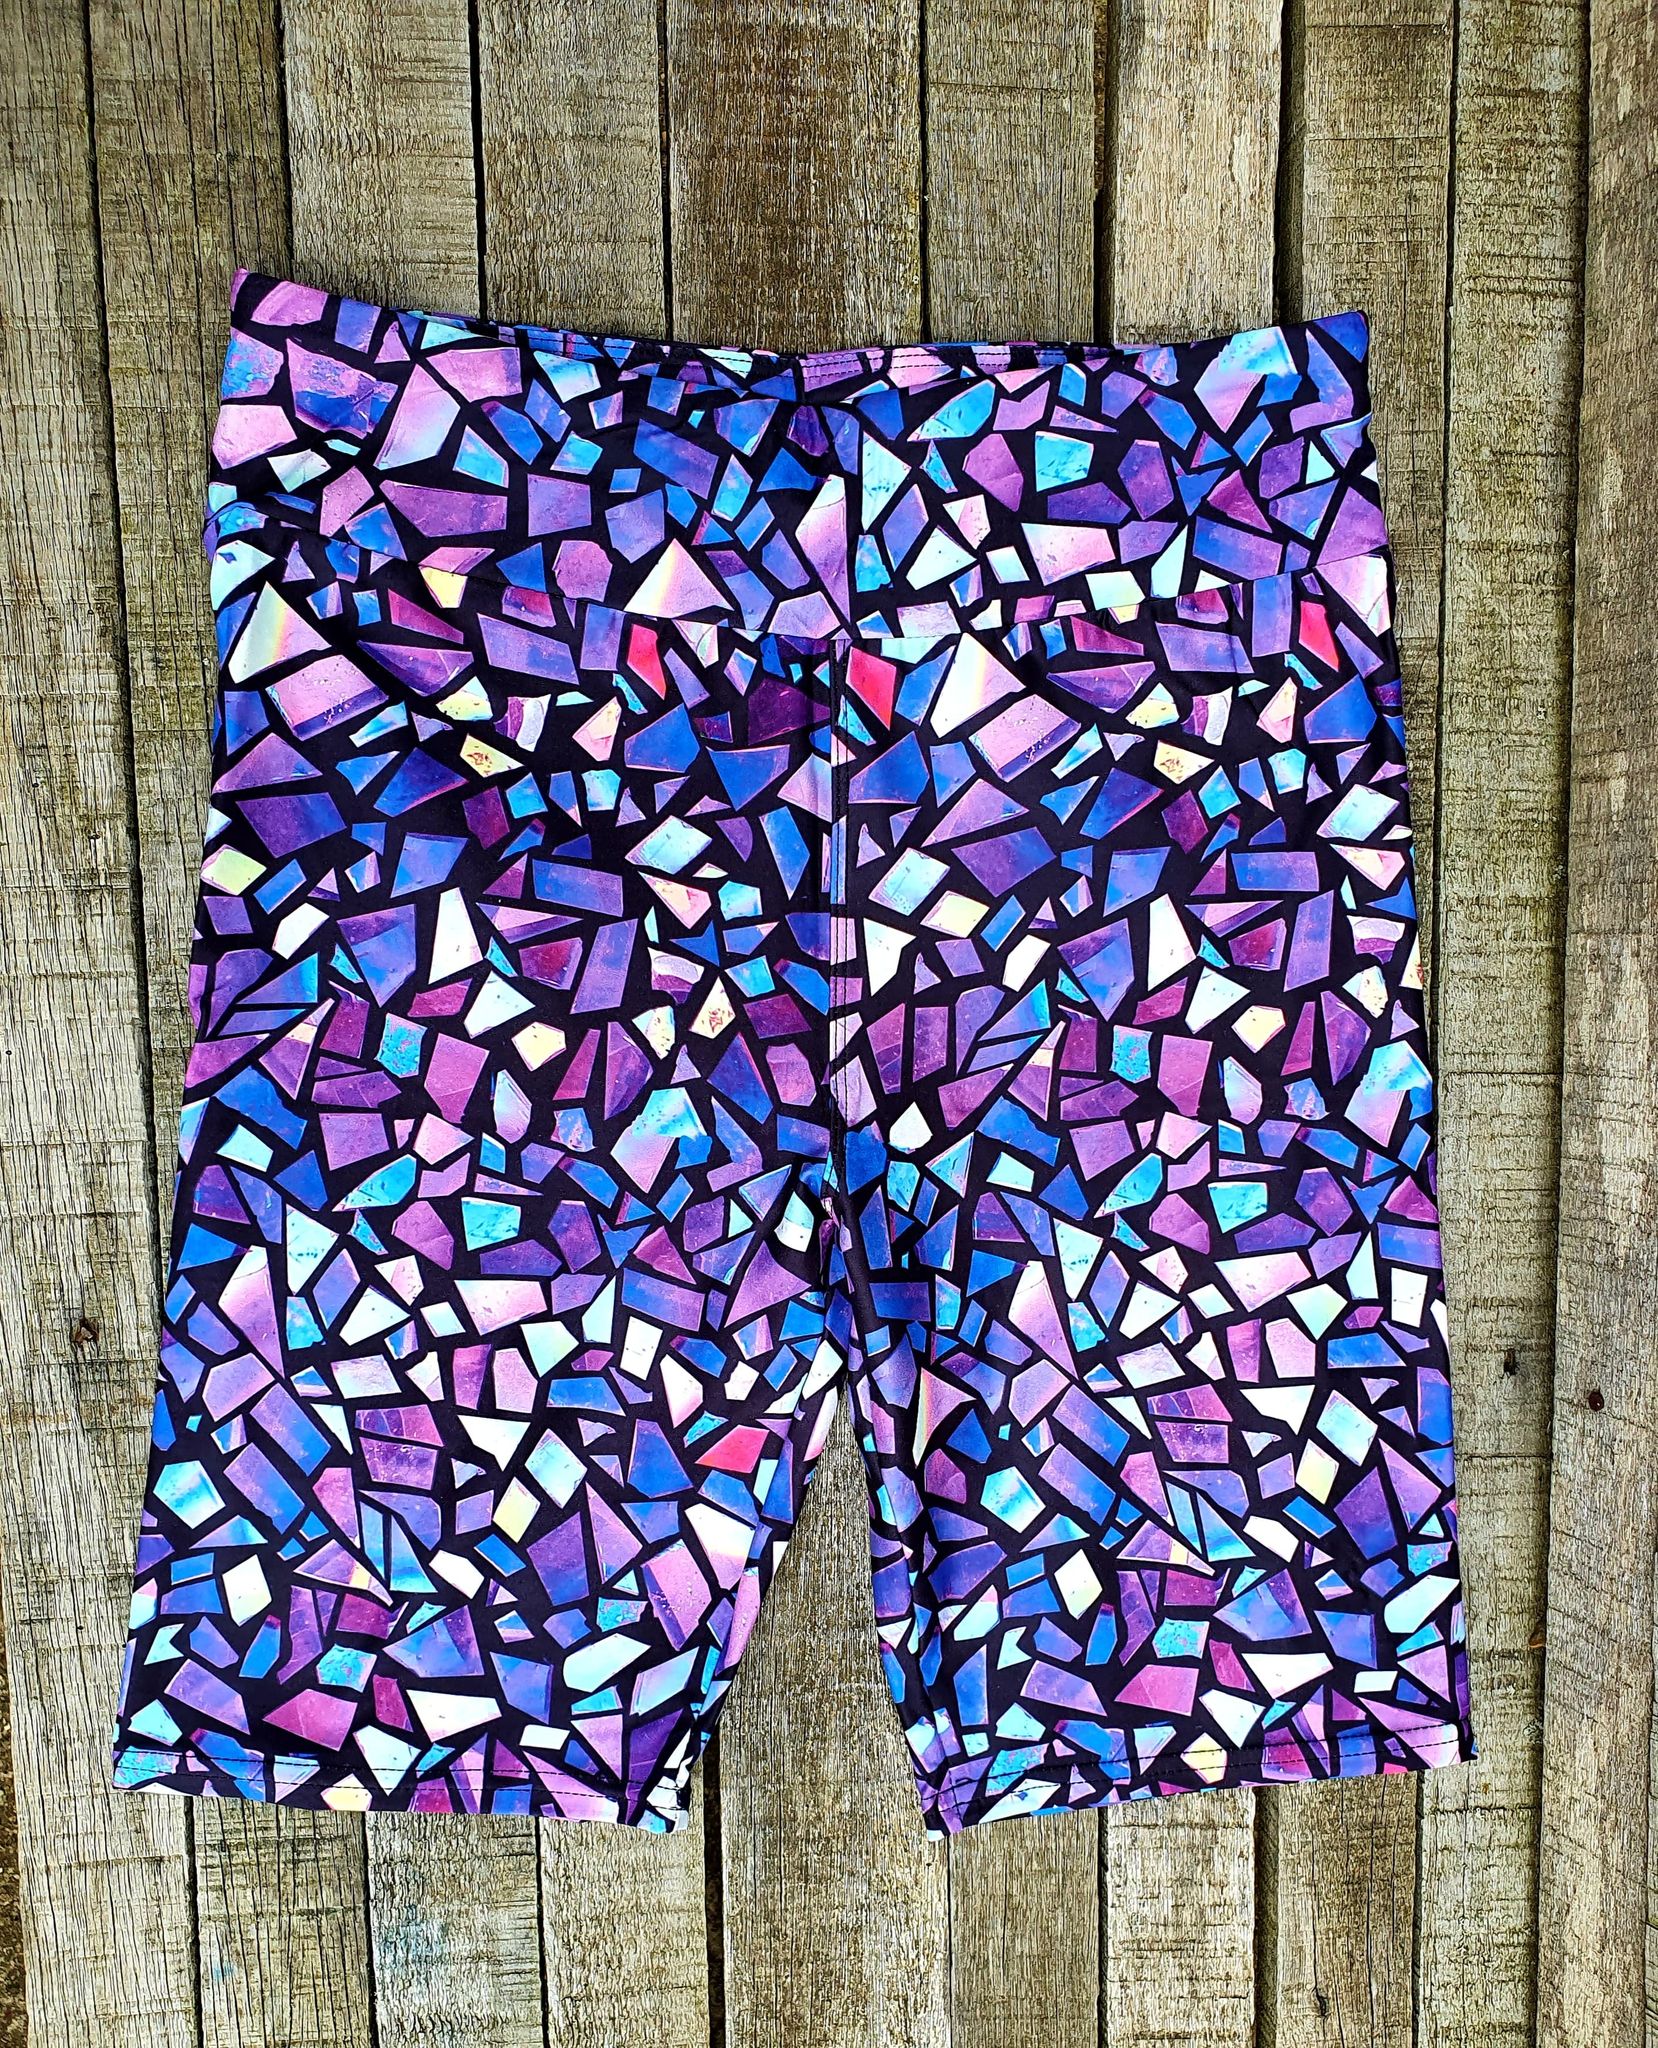 Funky Fit 24/7 Biker Shorts - Shattered Purples